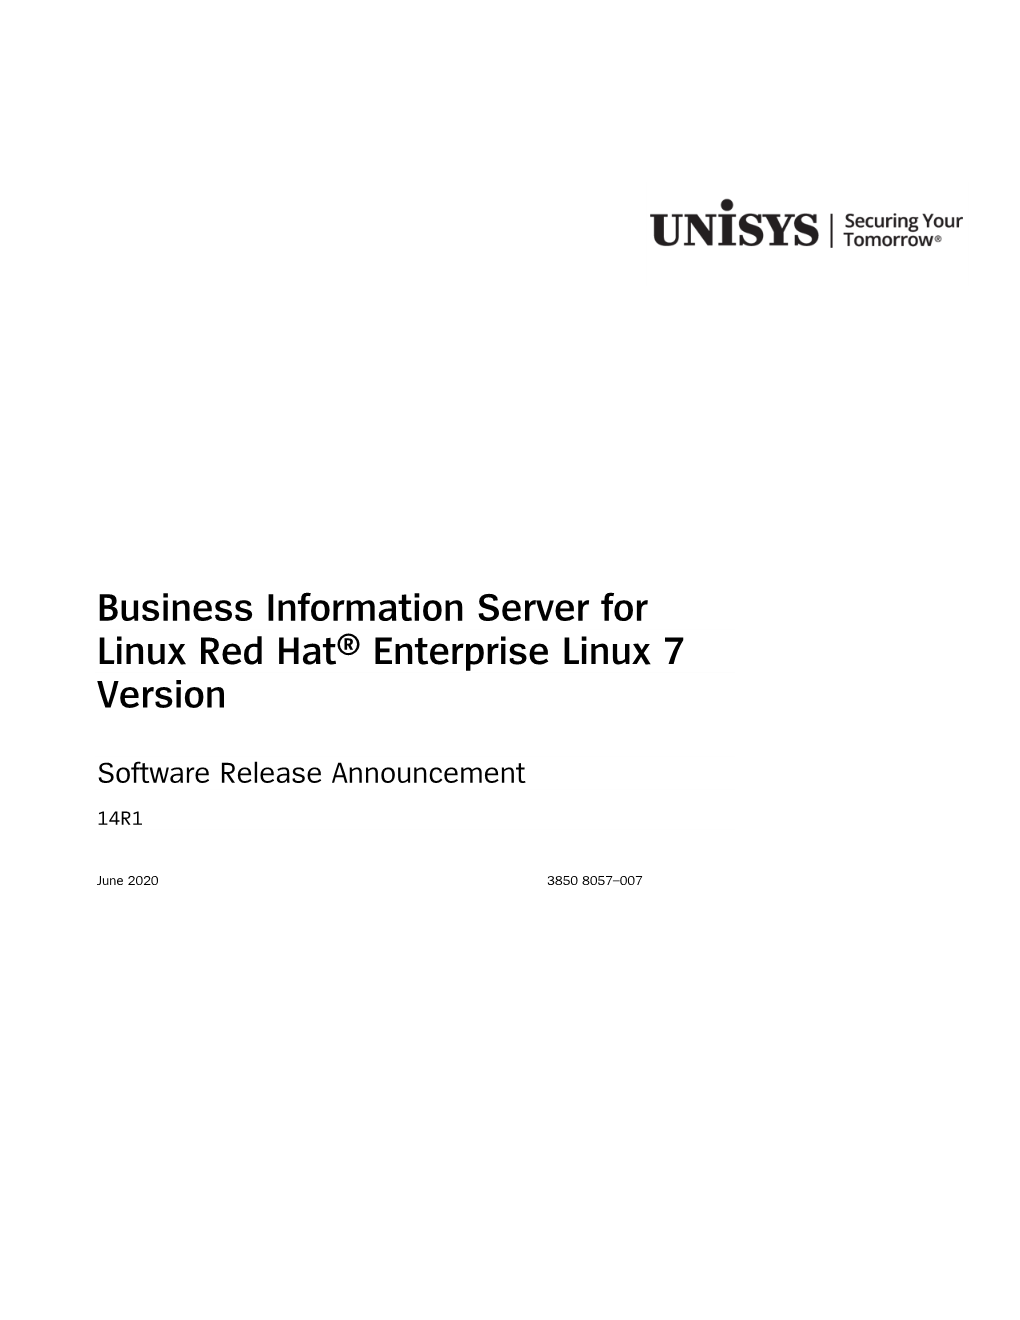 Business Information Server for Linux (Red Hat 7)